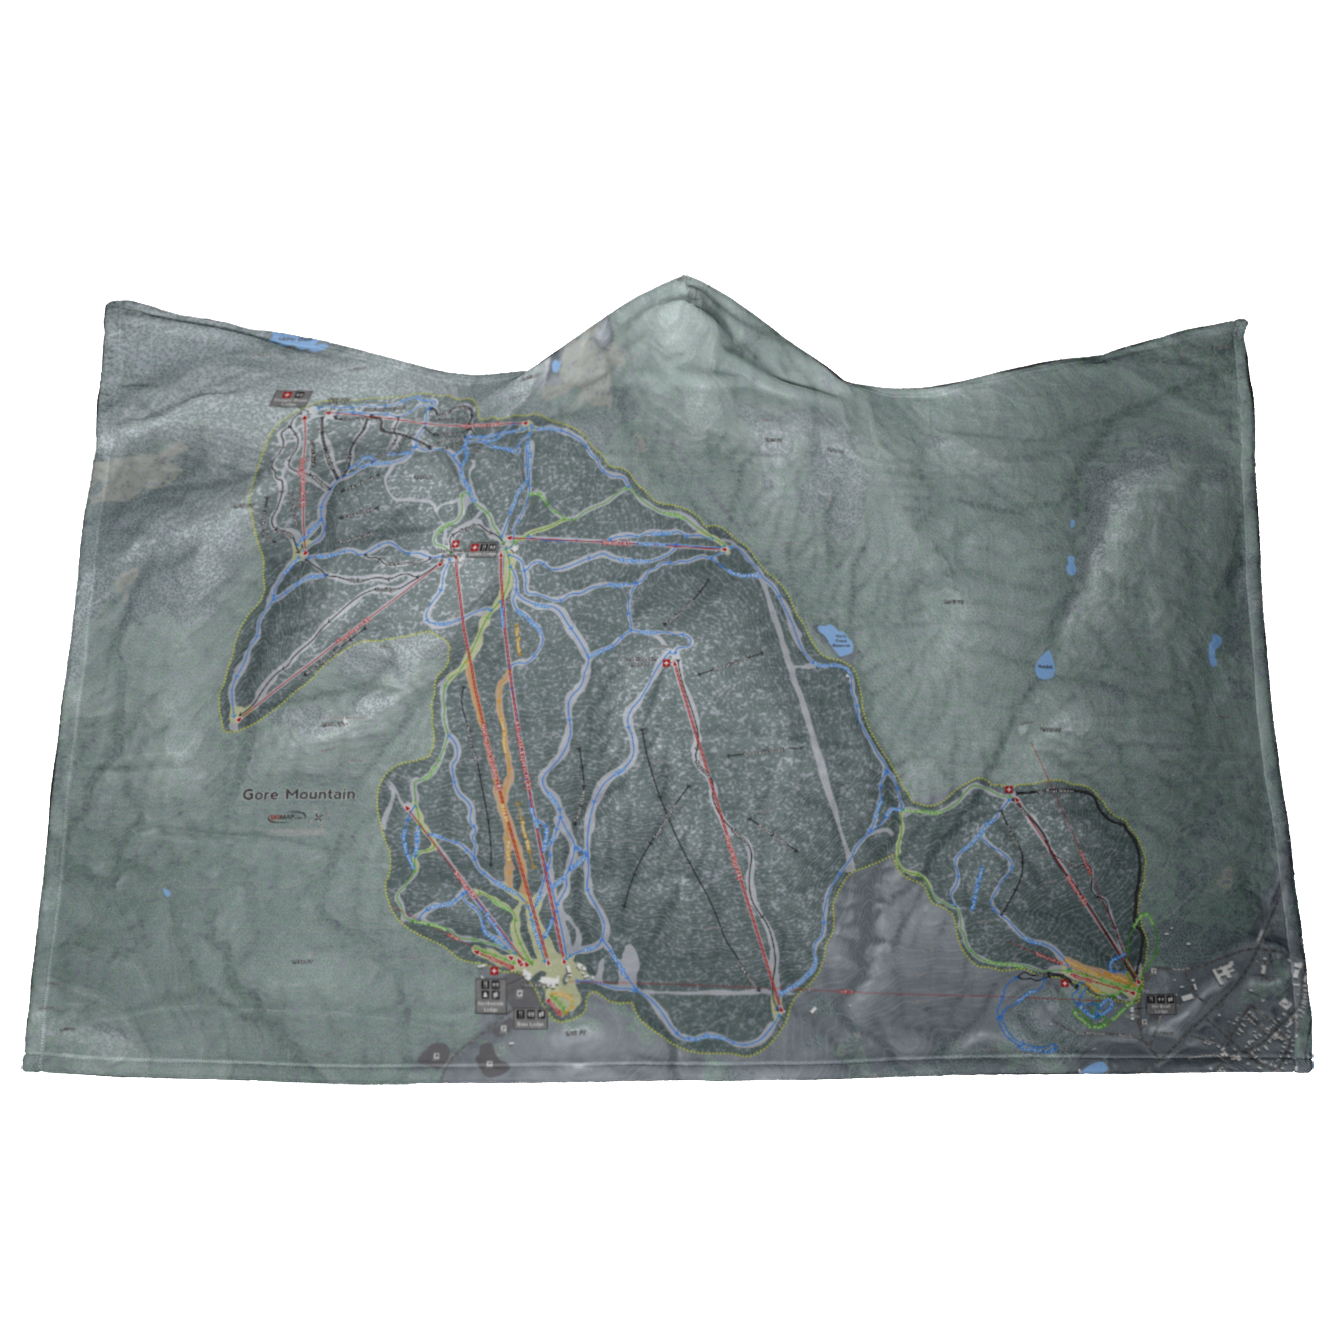 Gore Mountain, New York Ski Trail Map - Hooded Blanket - Powderaddicts